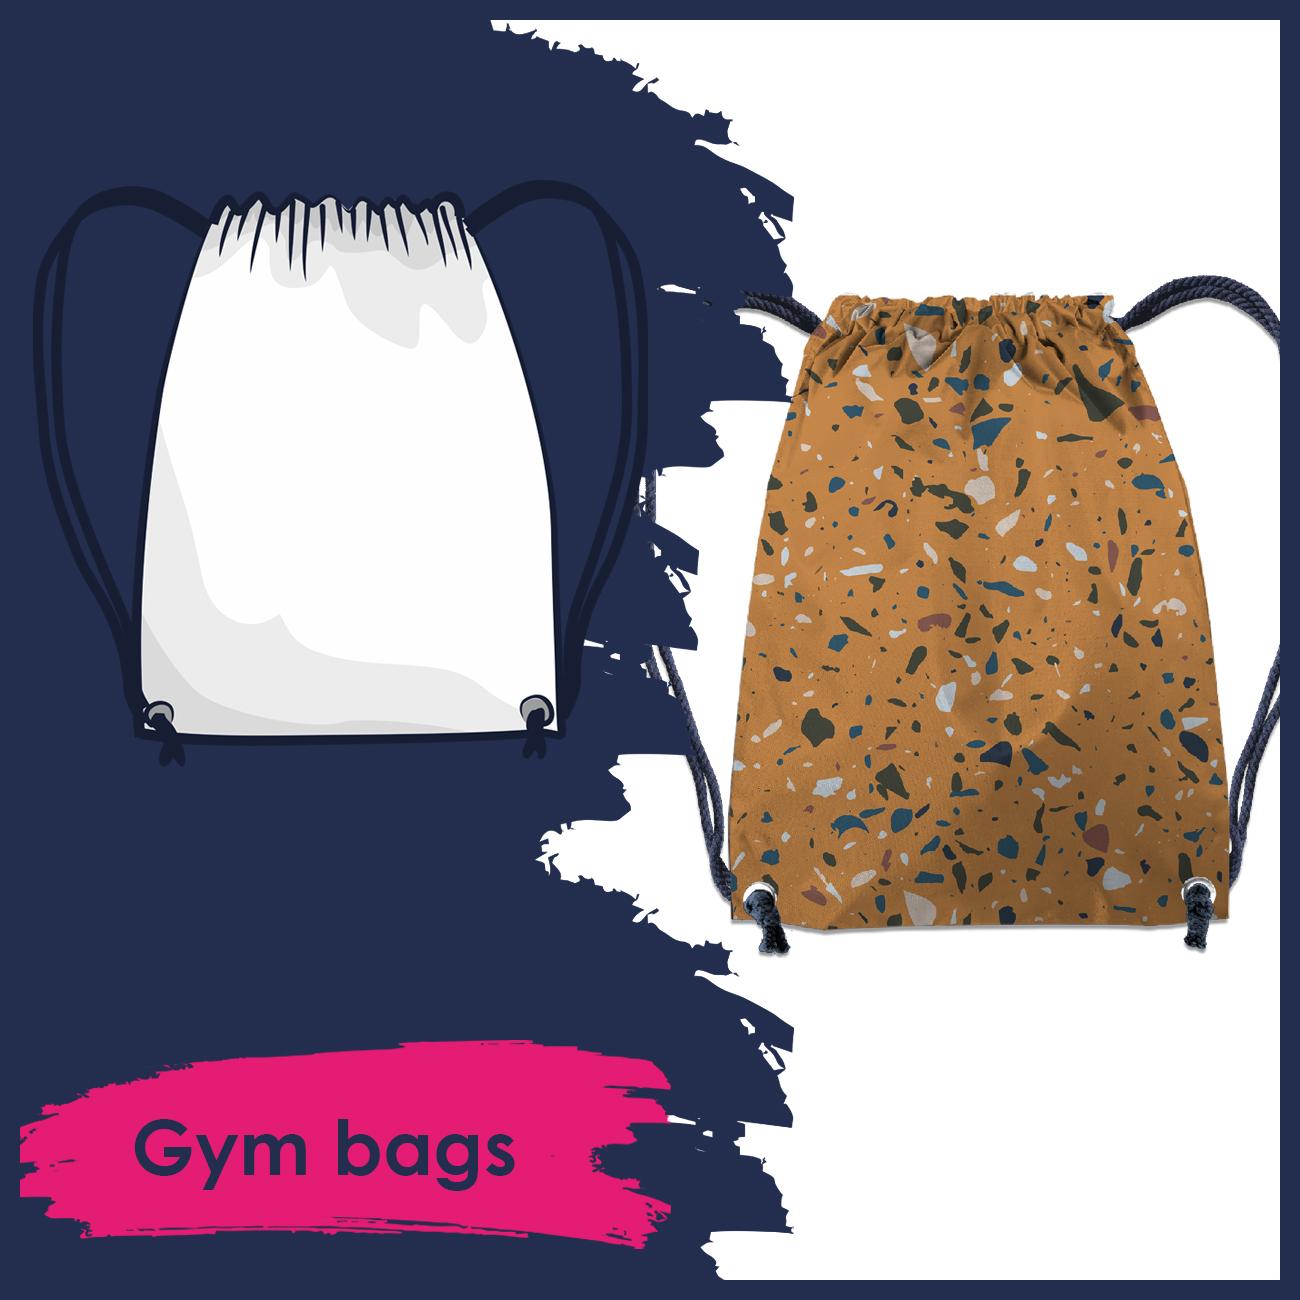 Gym bags